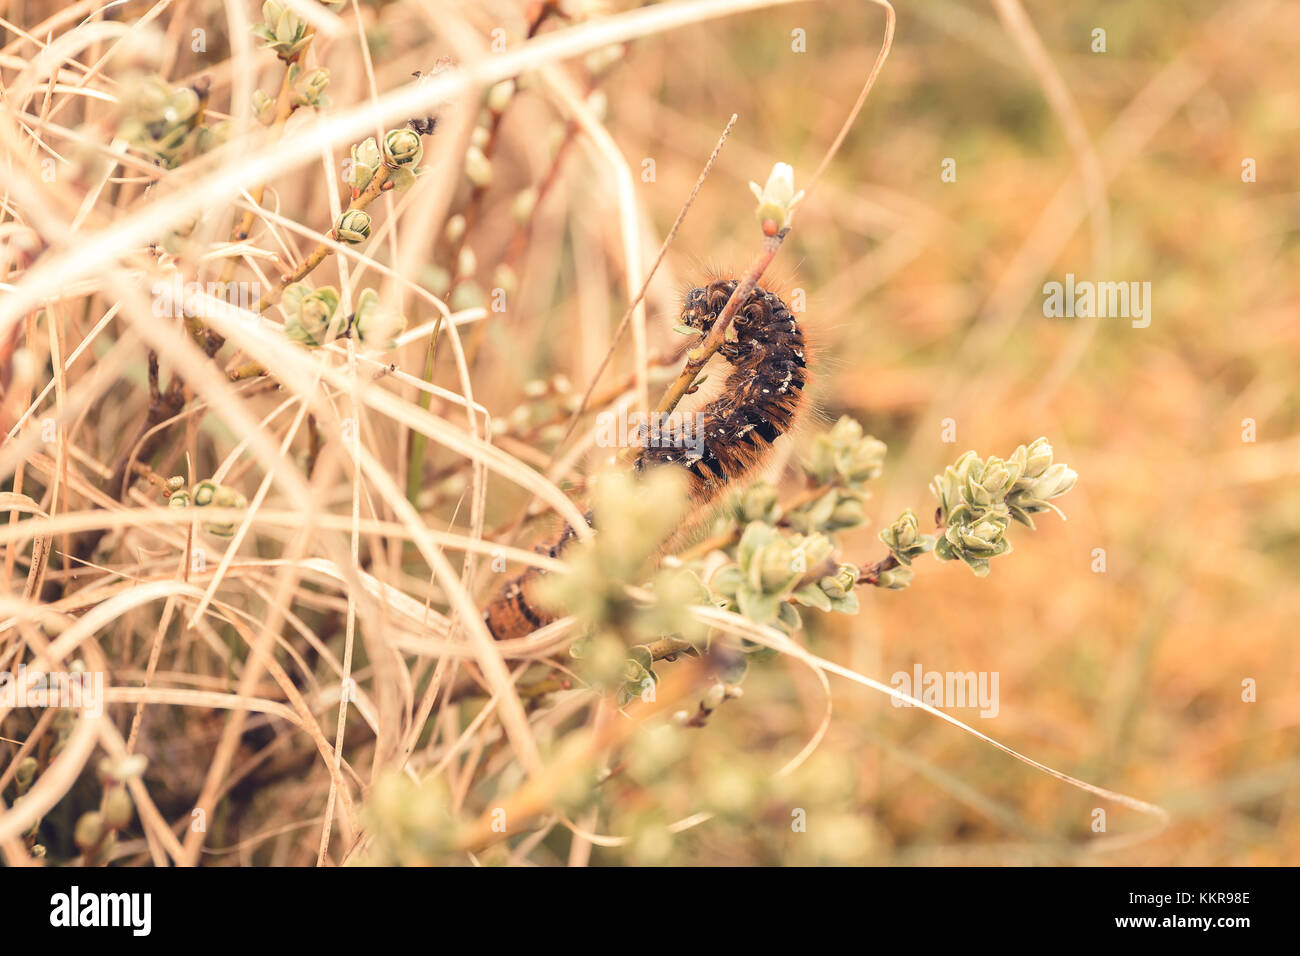 A caterpillar in autumn colored grass Stock Photo